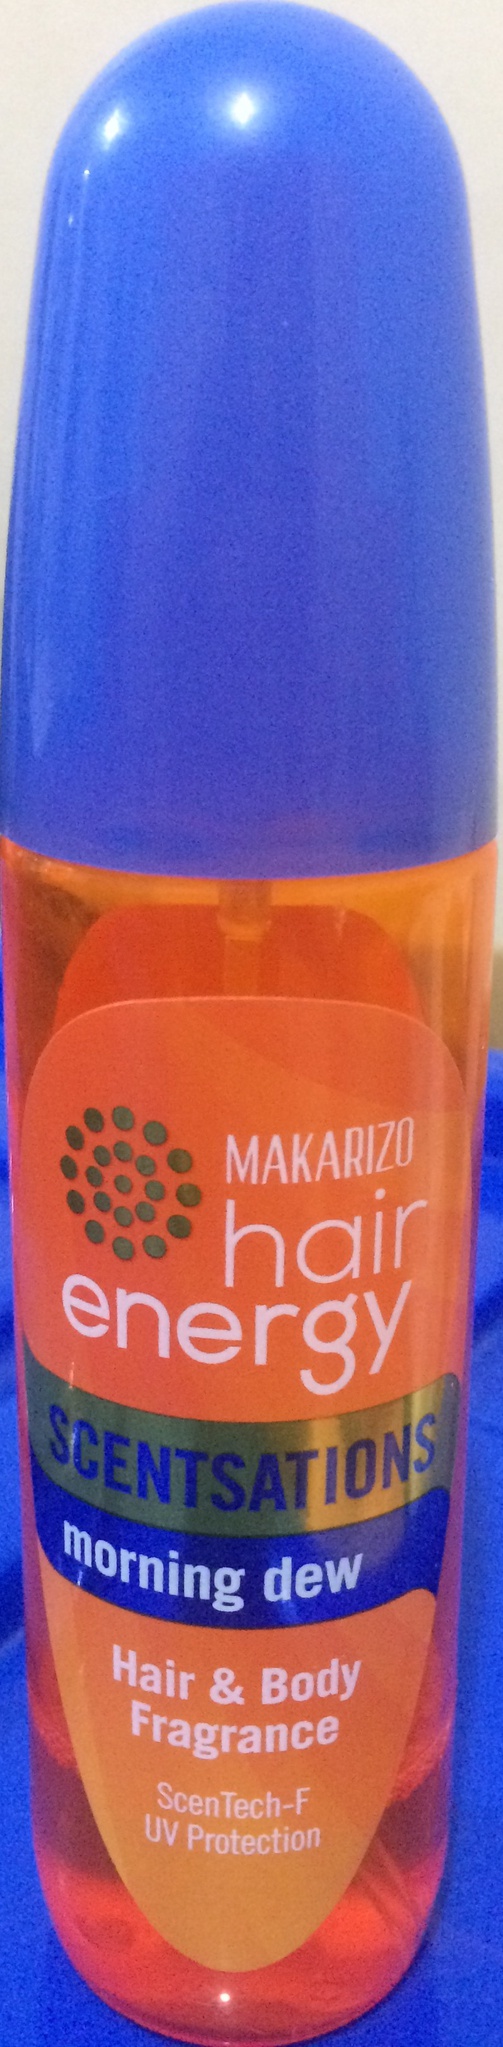 Makarizo Hair Energy Hair & Body Fragrance